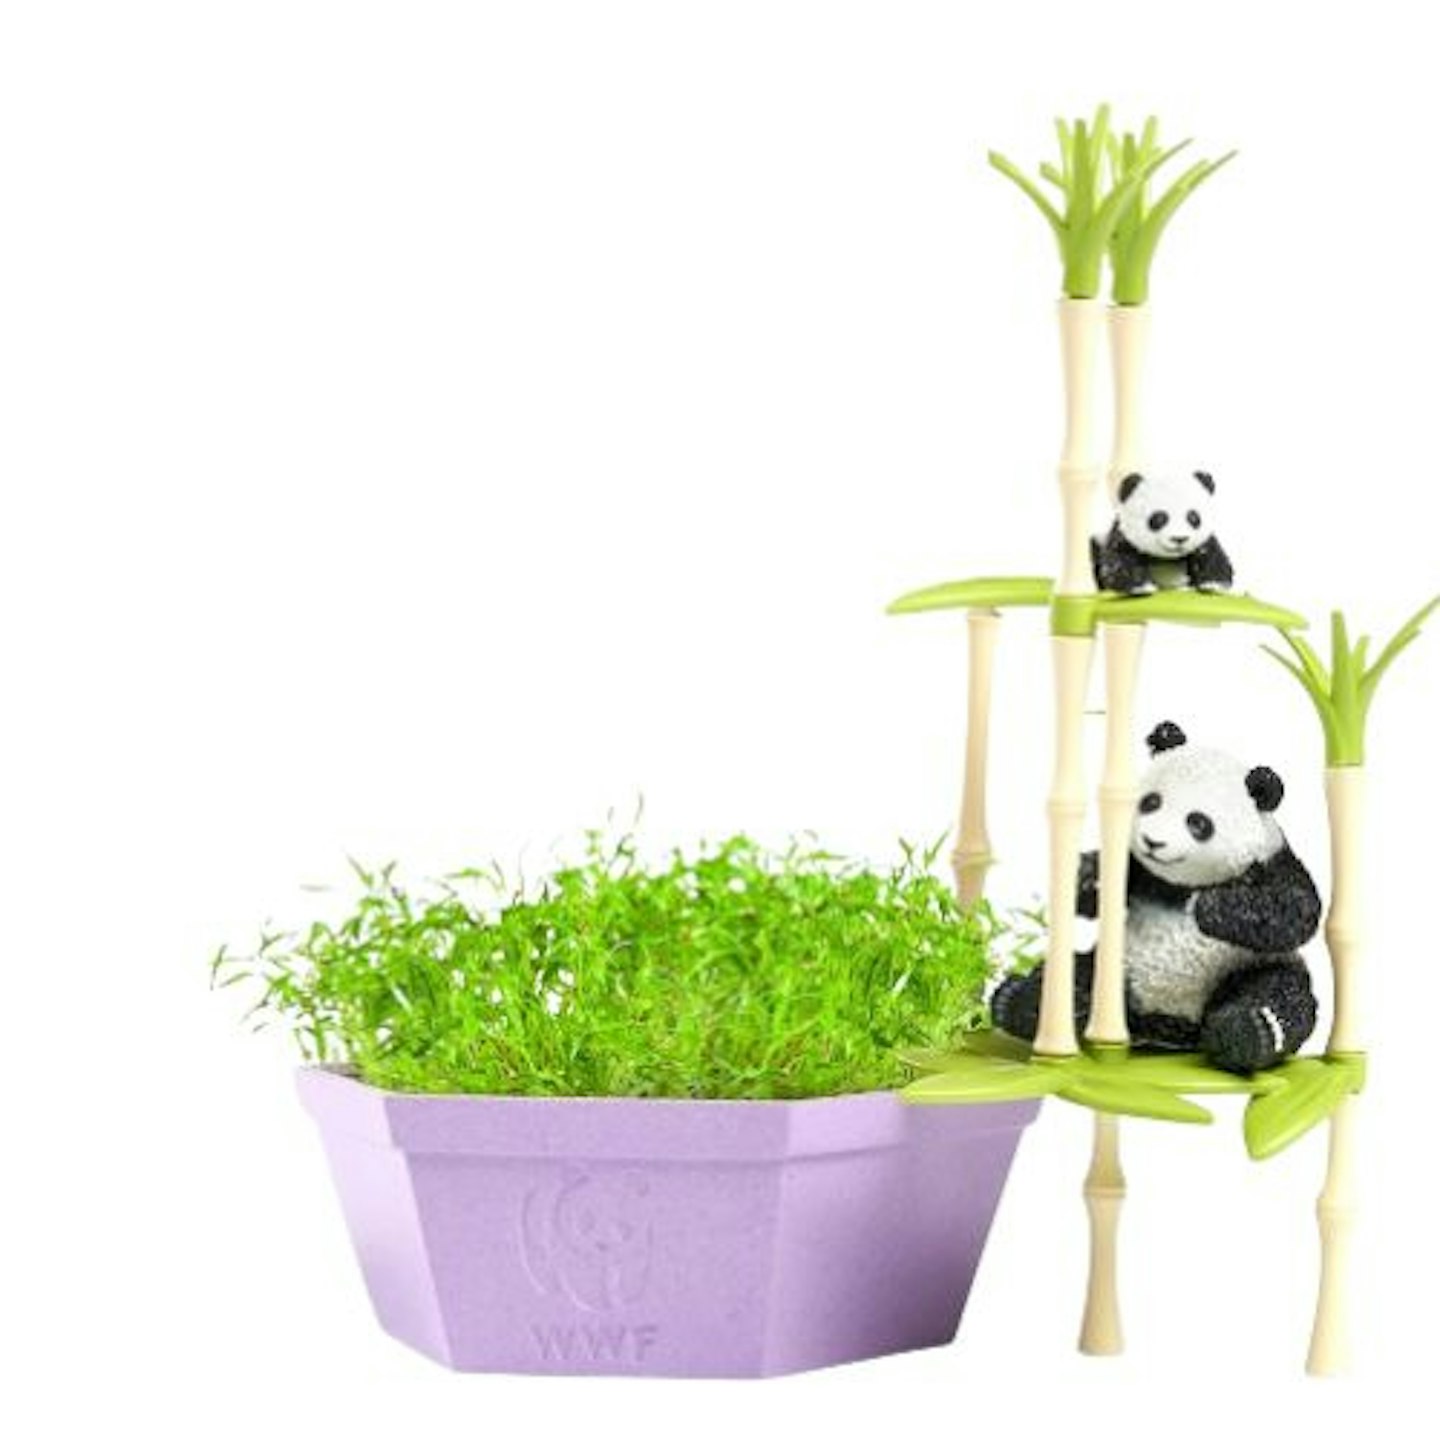 WWF Wild Scenes - Pandas' Bamboo Forest